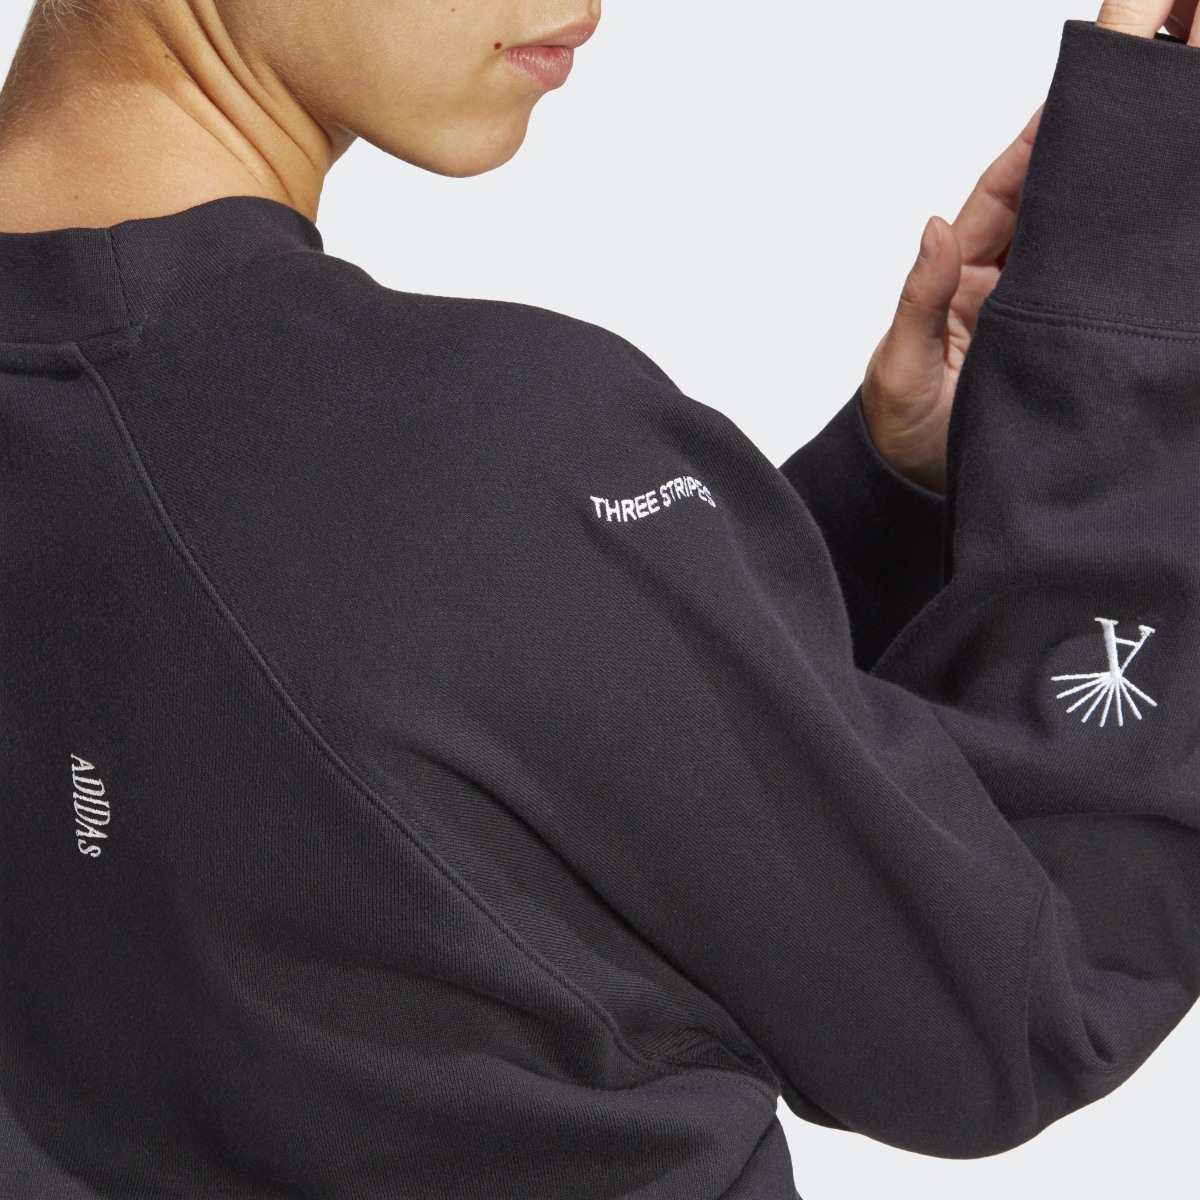 Adidas Healing Crystal-Inspired Graphics Oversized Crewneck Sweatshirt. 7